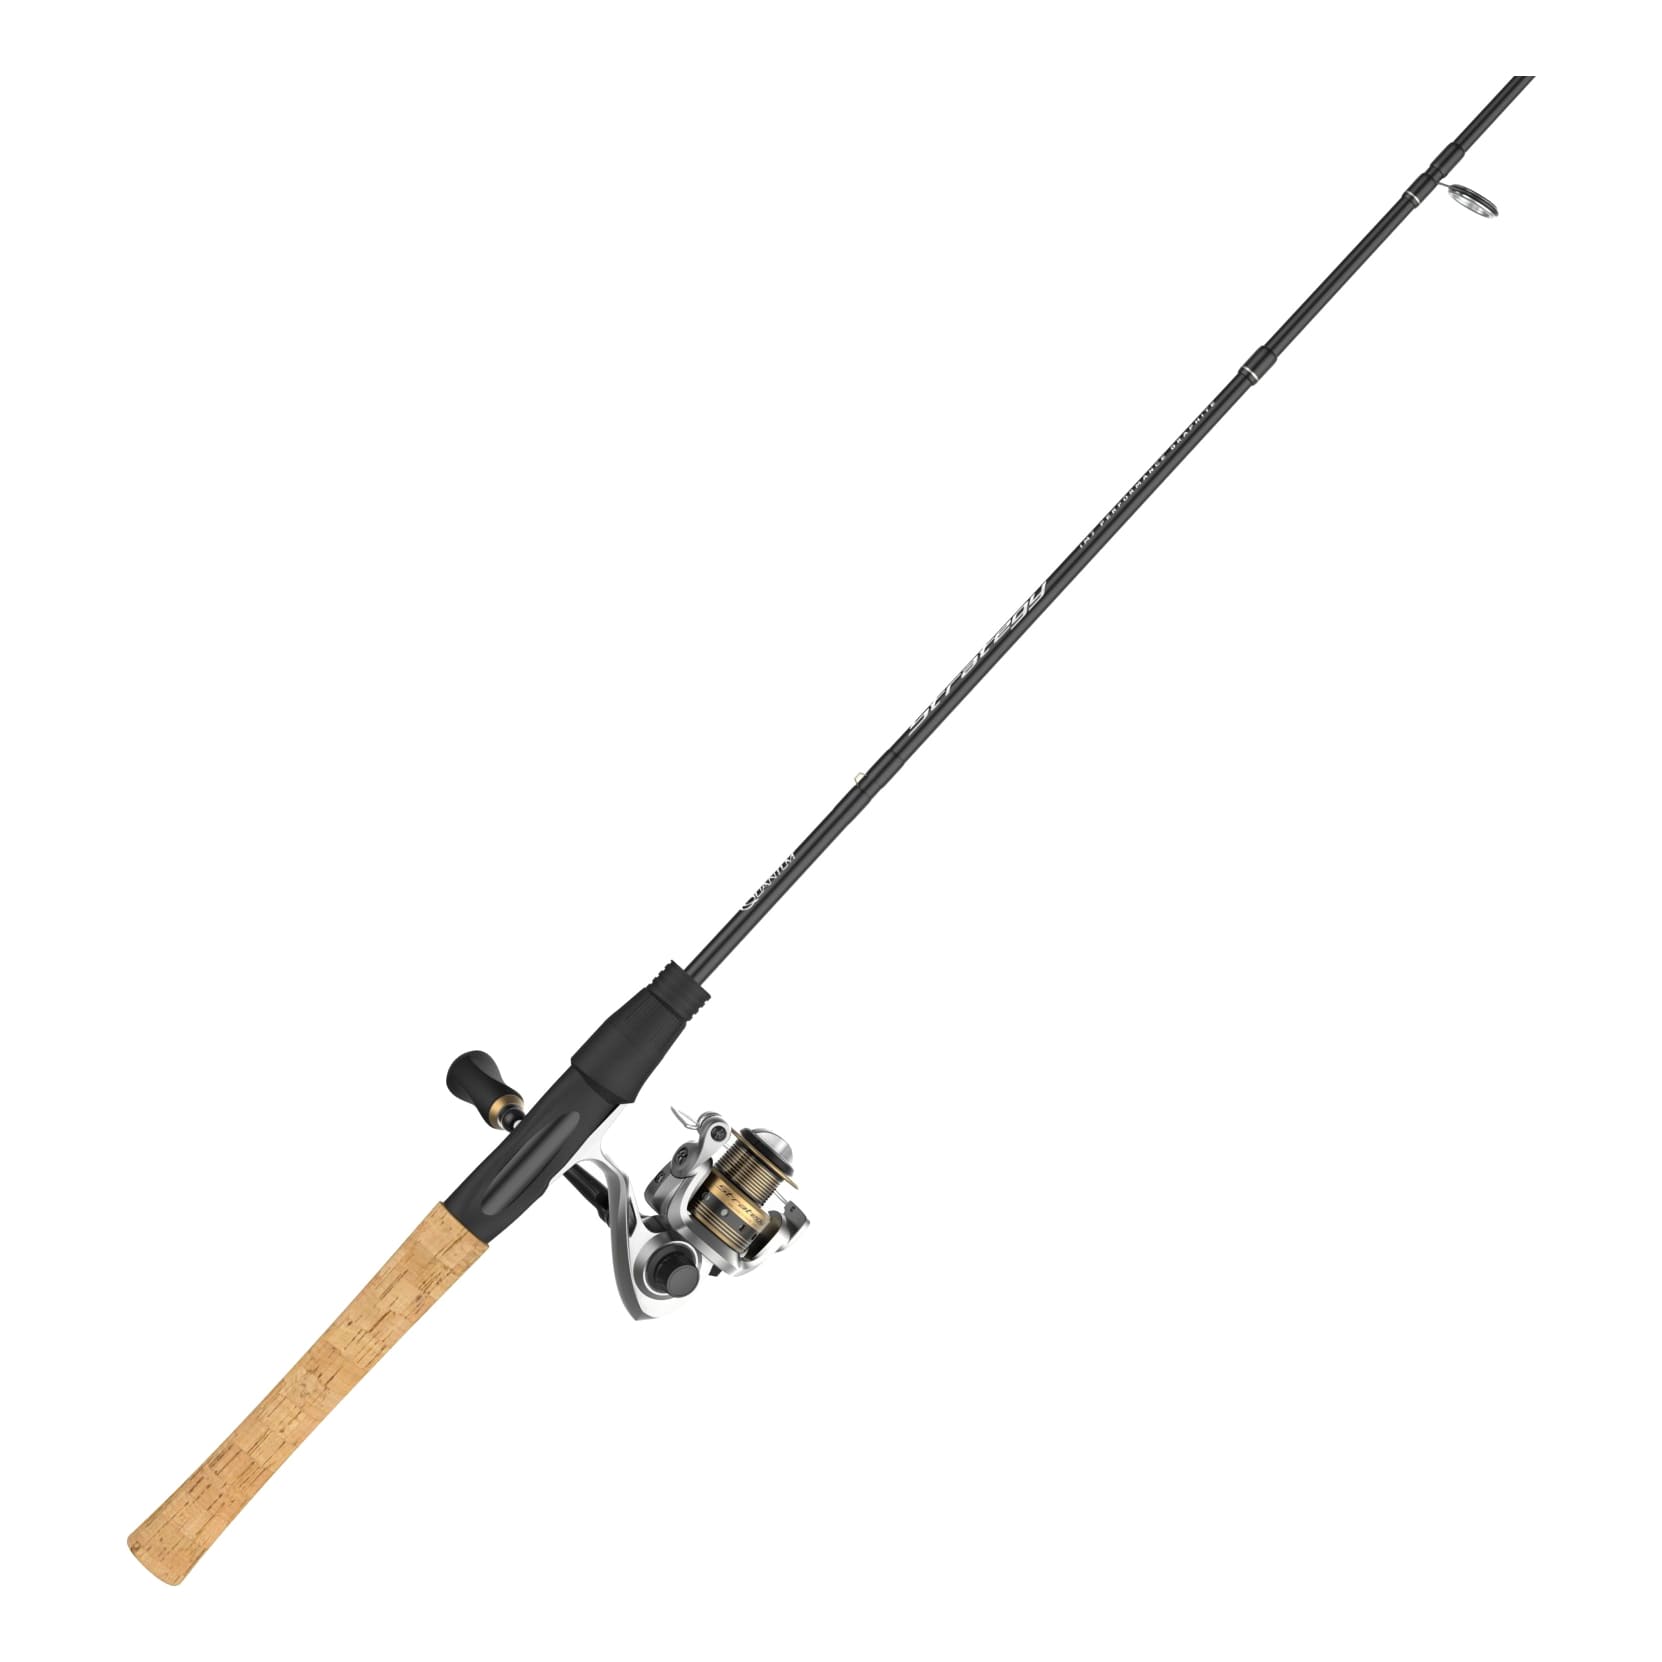  Okuma B-S-802-40 Boundary Medium-Heavy Spinning Combo, 8-Foot  Length, Black and Silver Finish : Fishing Rod And Reel Combos : Sports &  Outdoors